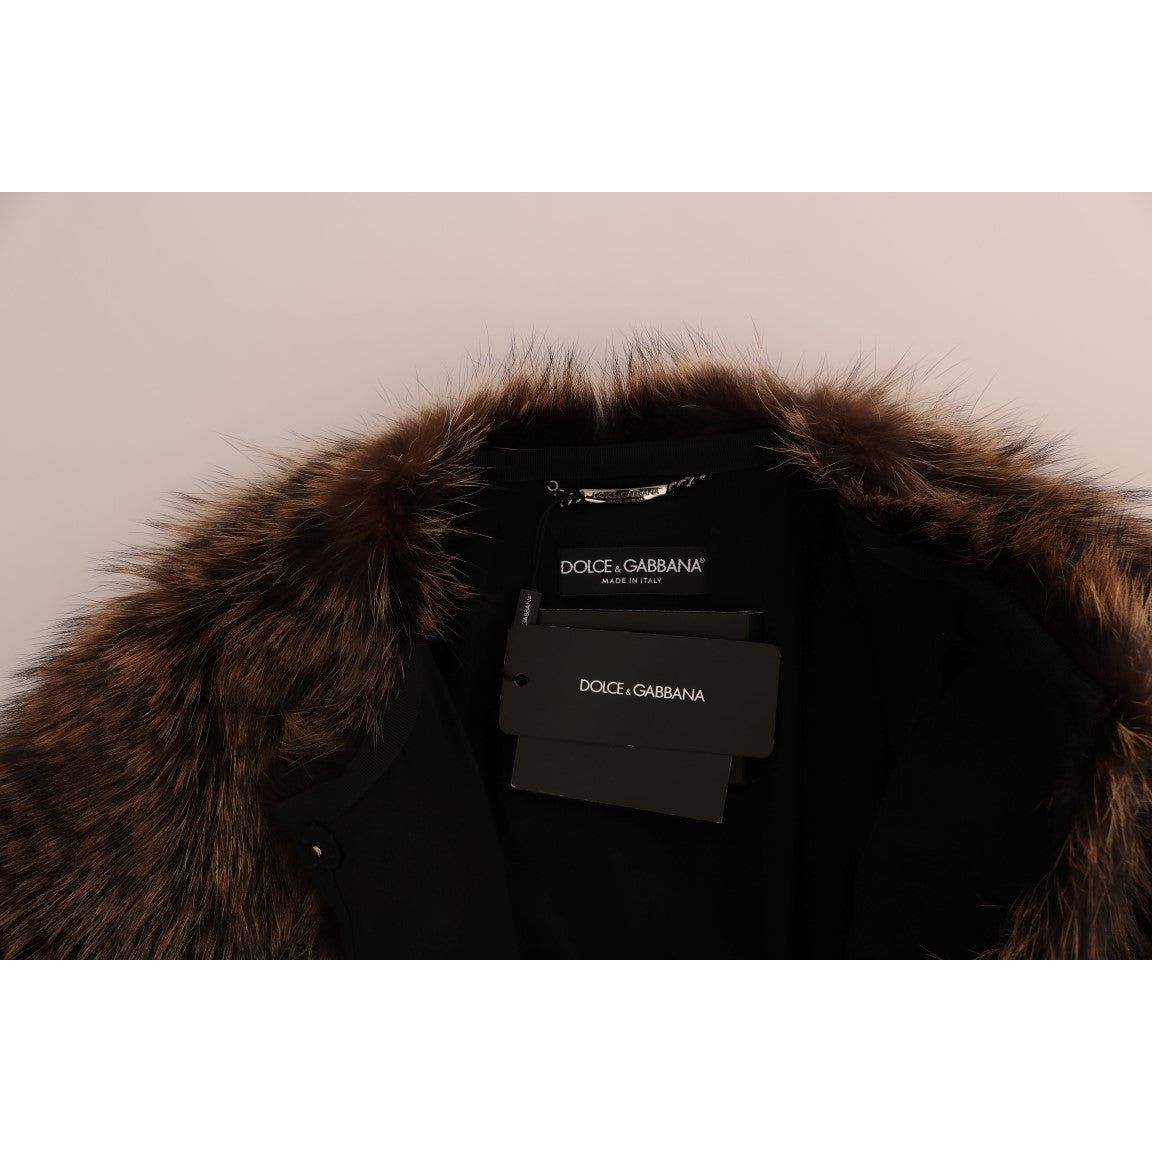 Dolce & Gabbana Elegant Brown Raccoon Fur Knee-Length Coat brown-raccoon-fur-coat-jacket Coats & Jackets 513000-brown-raccoon-fur-coat-jacket-5.jpg